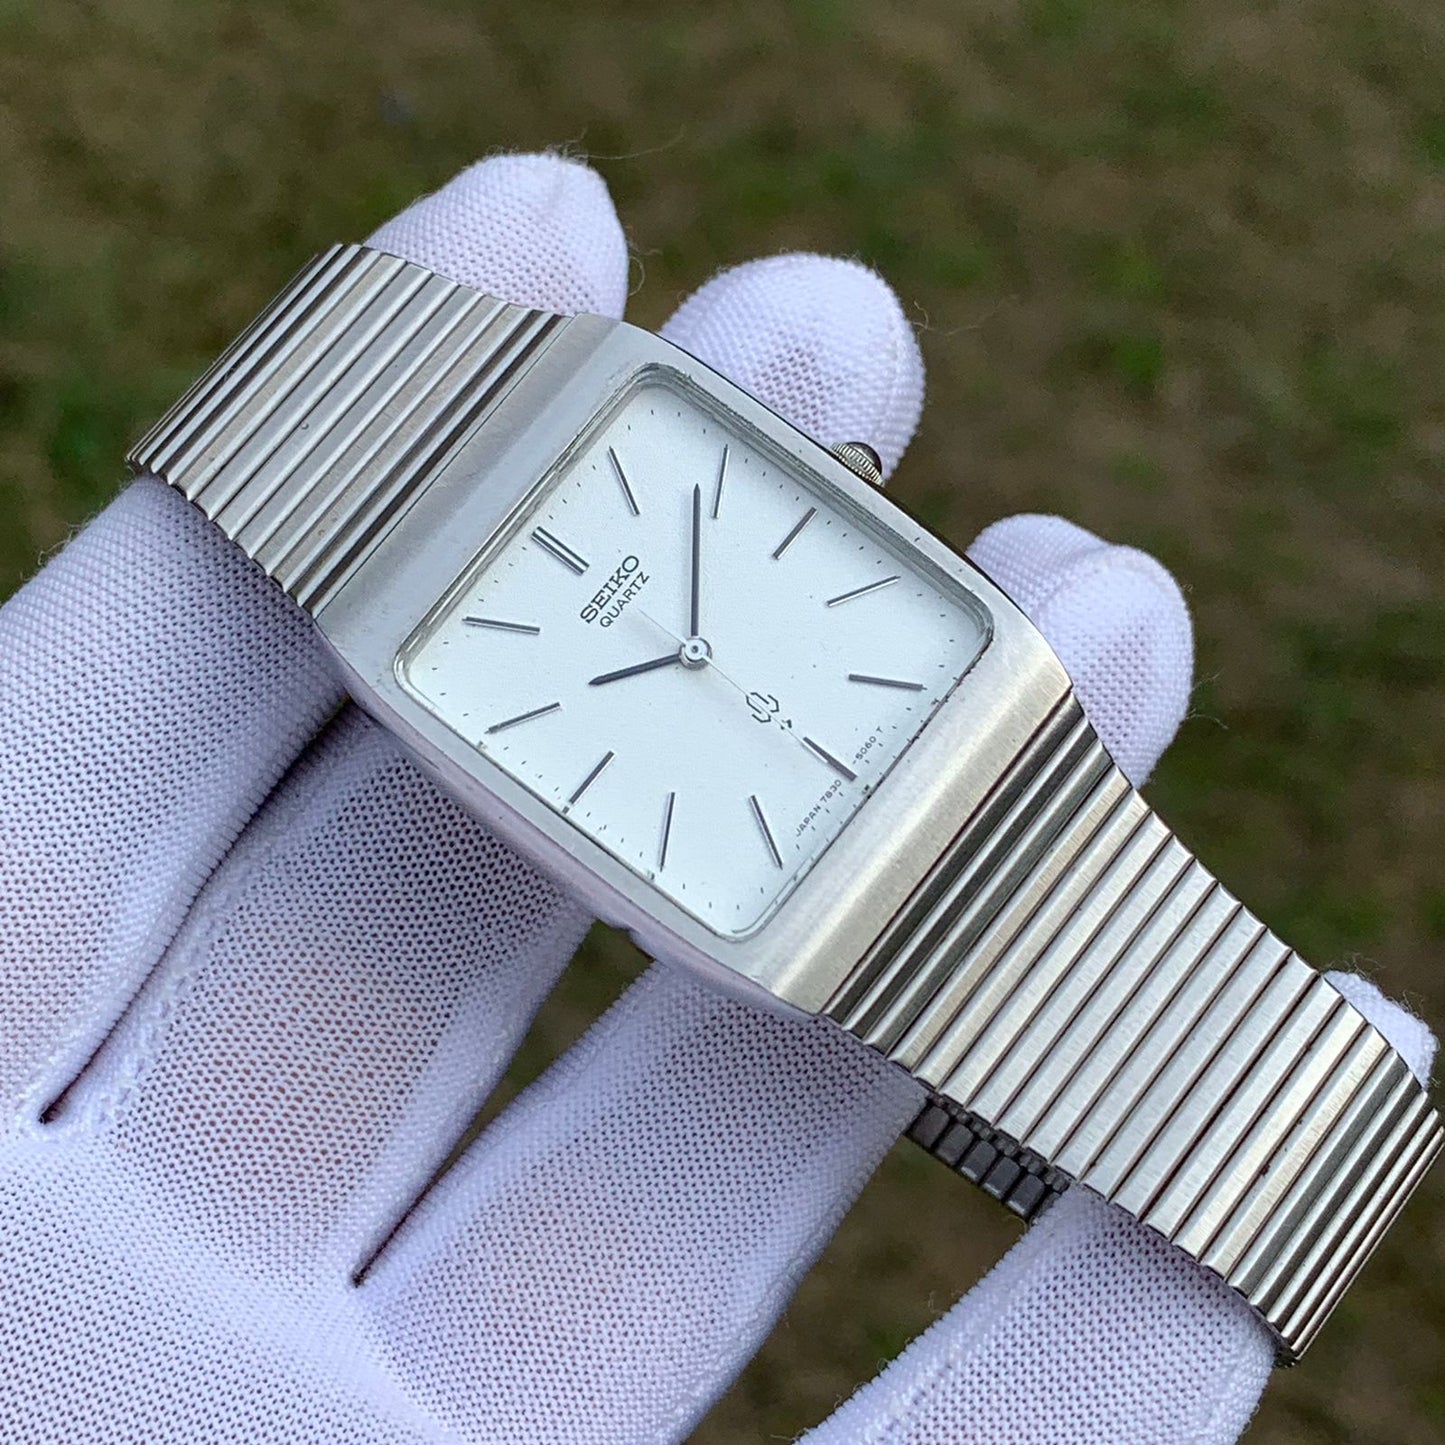 Vintage Seiko JDM Dress Formal Japan Made Men's Quartz Watch 7830-5050.